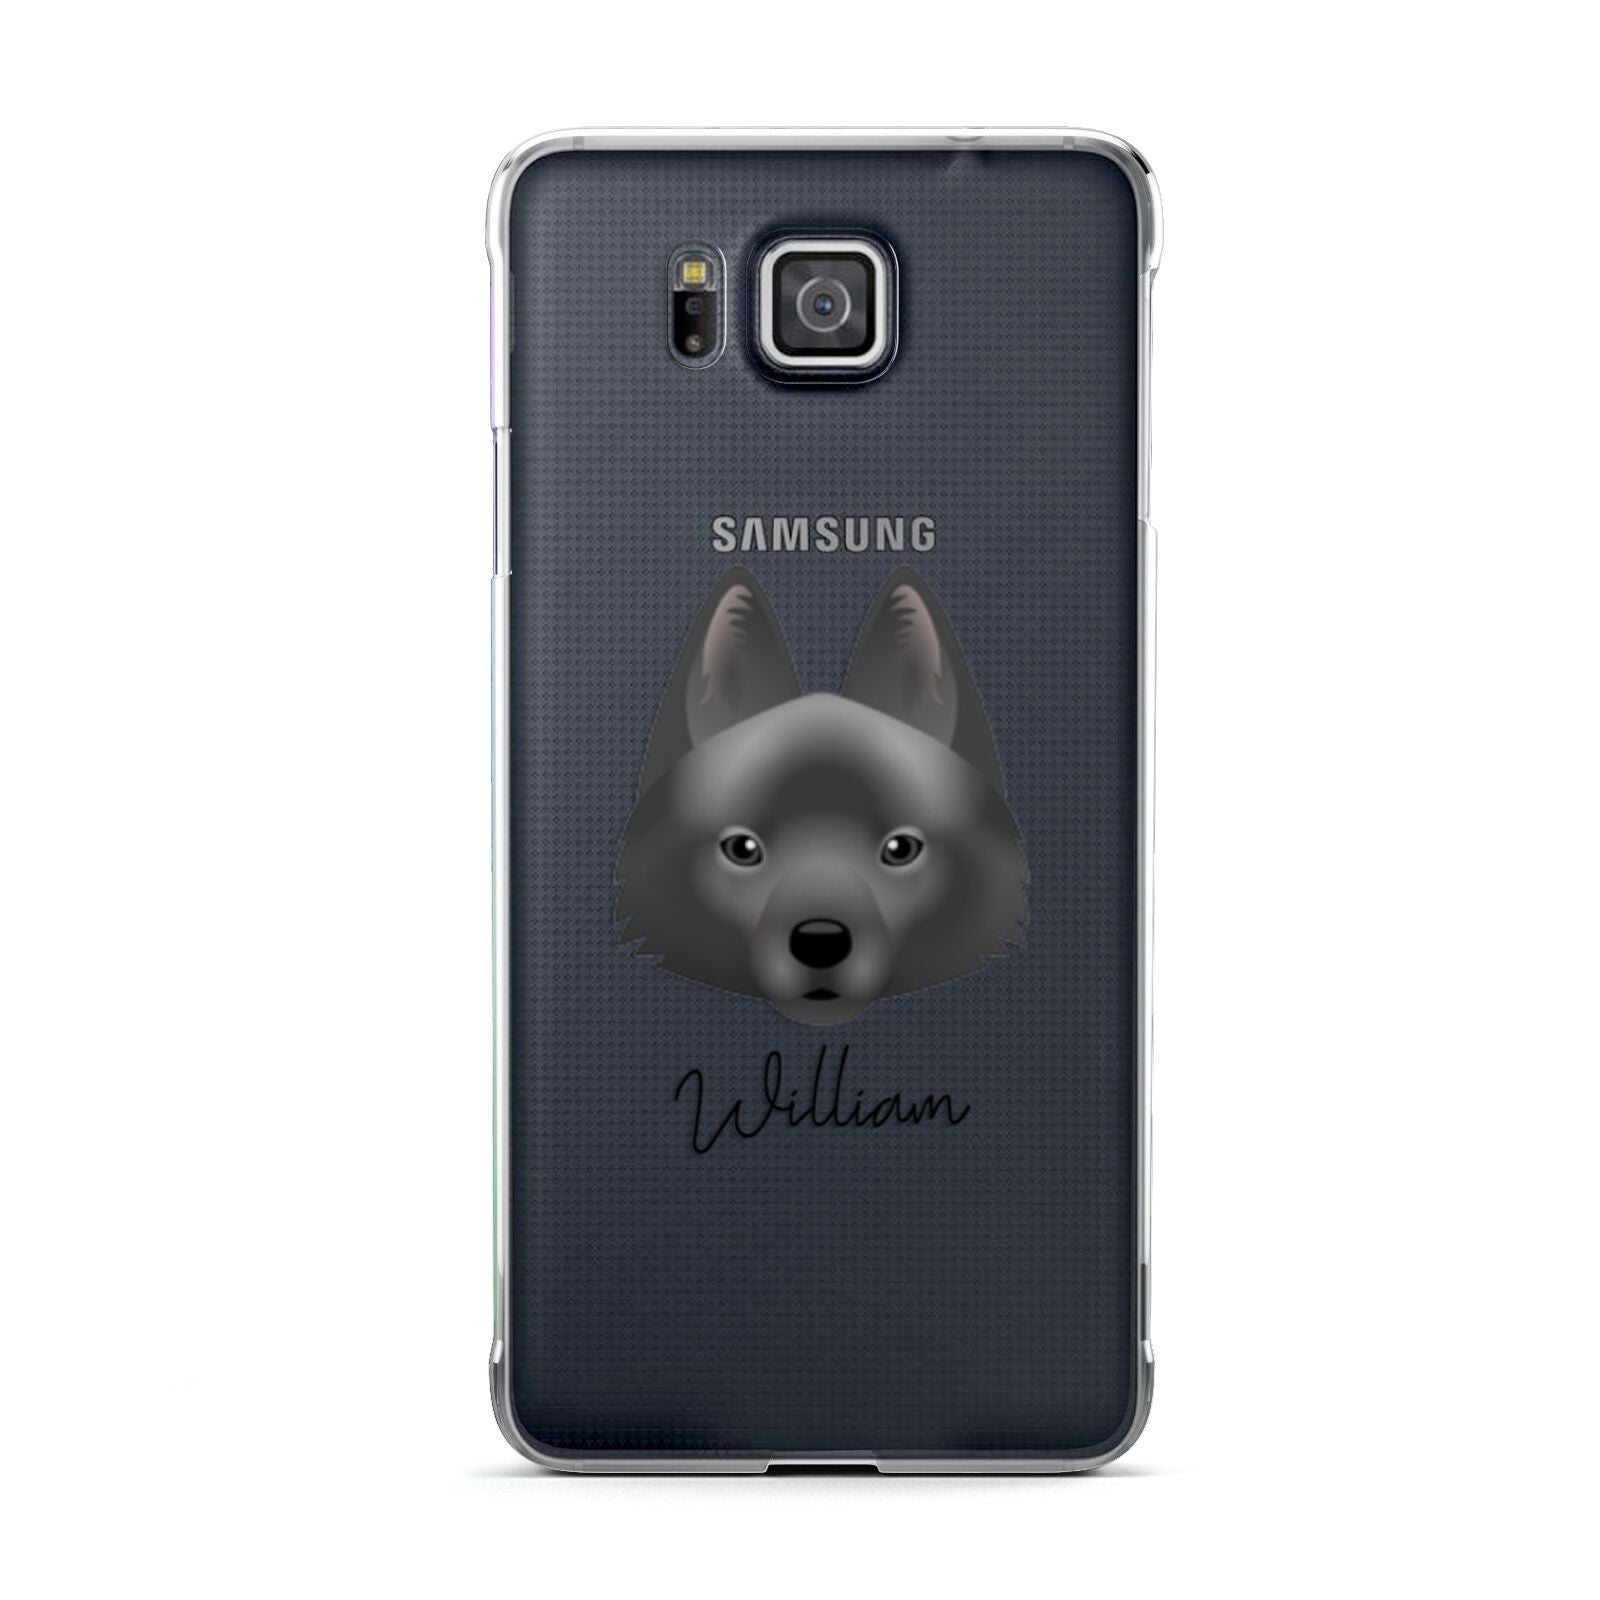 Schipperke Personalised Samsung Galaxy Alpha Case